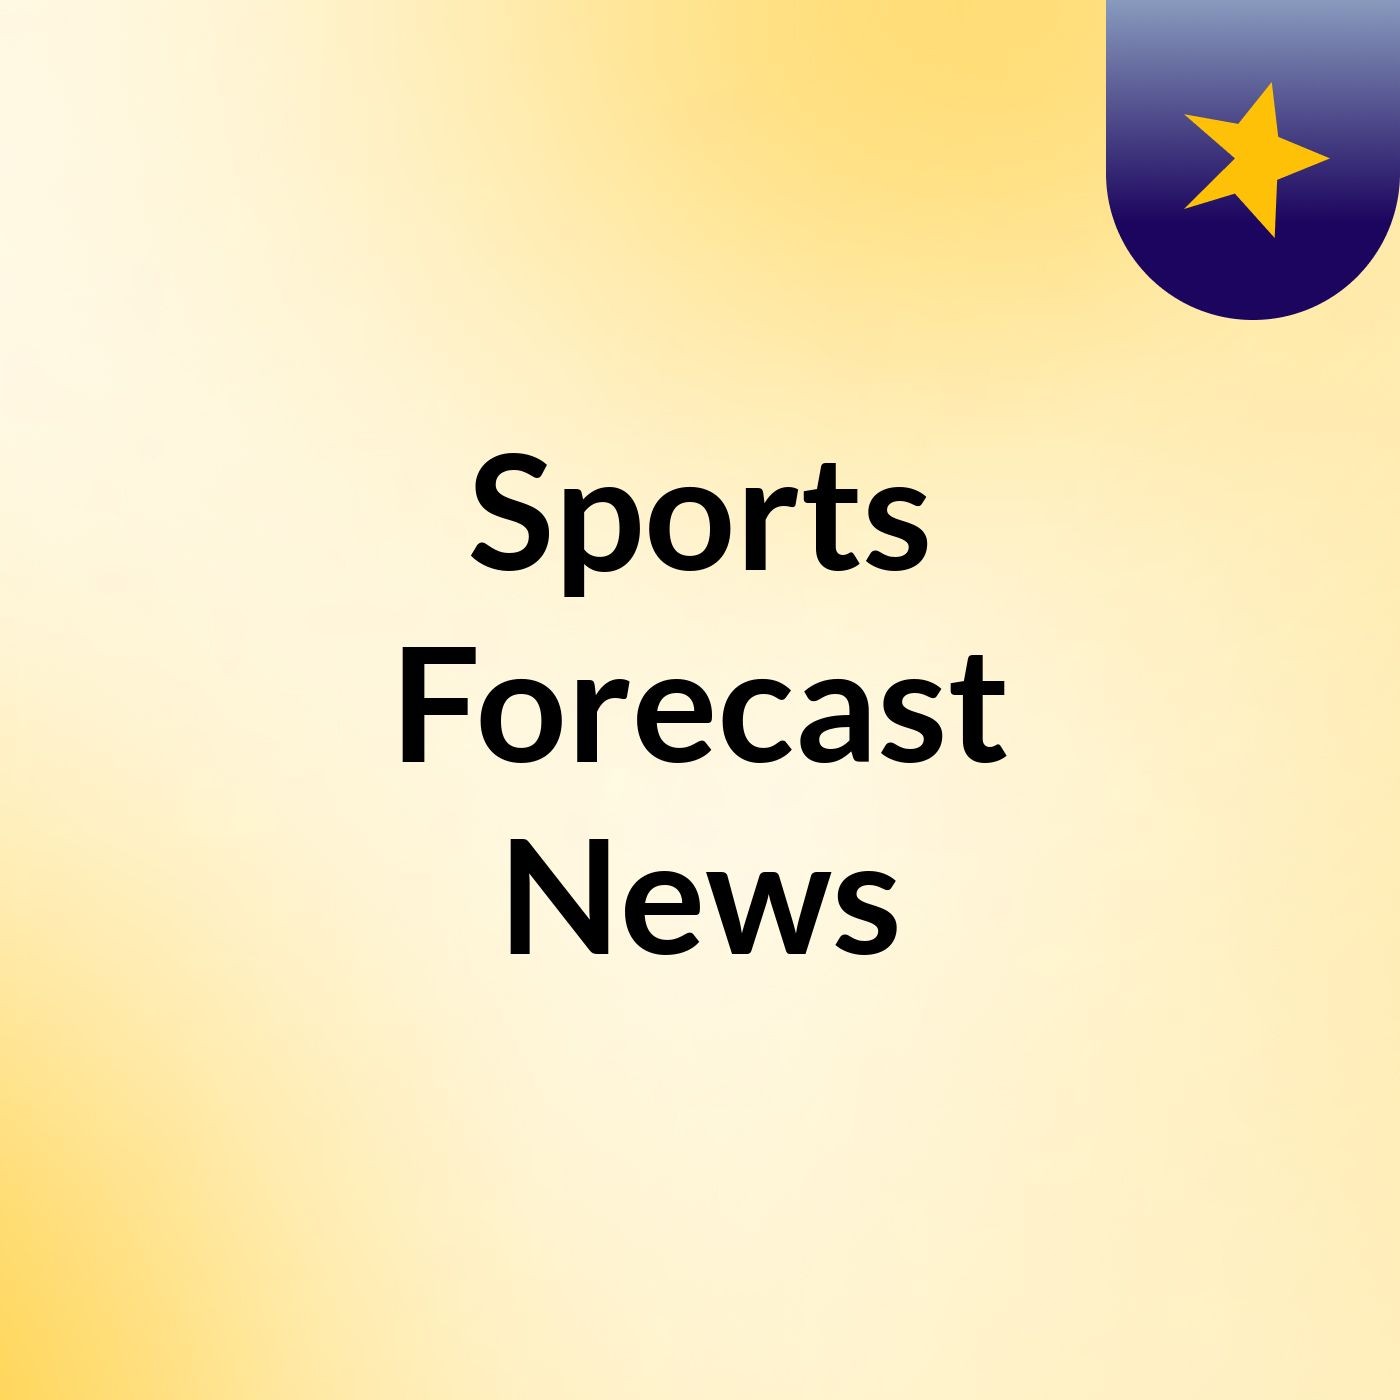 Sports Forecast News